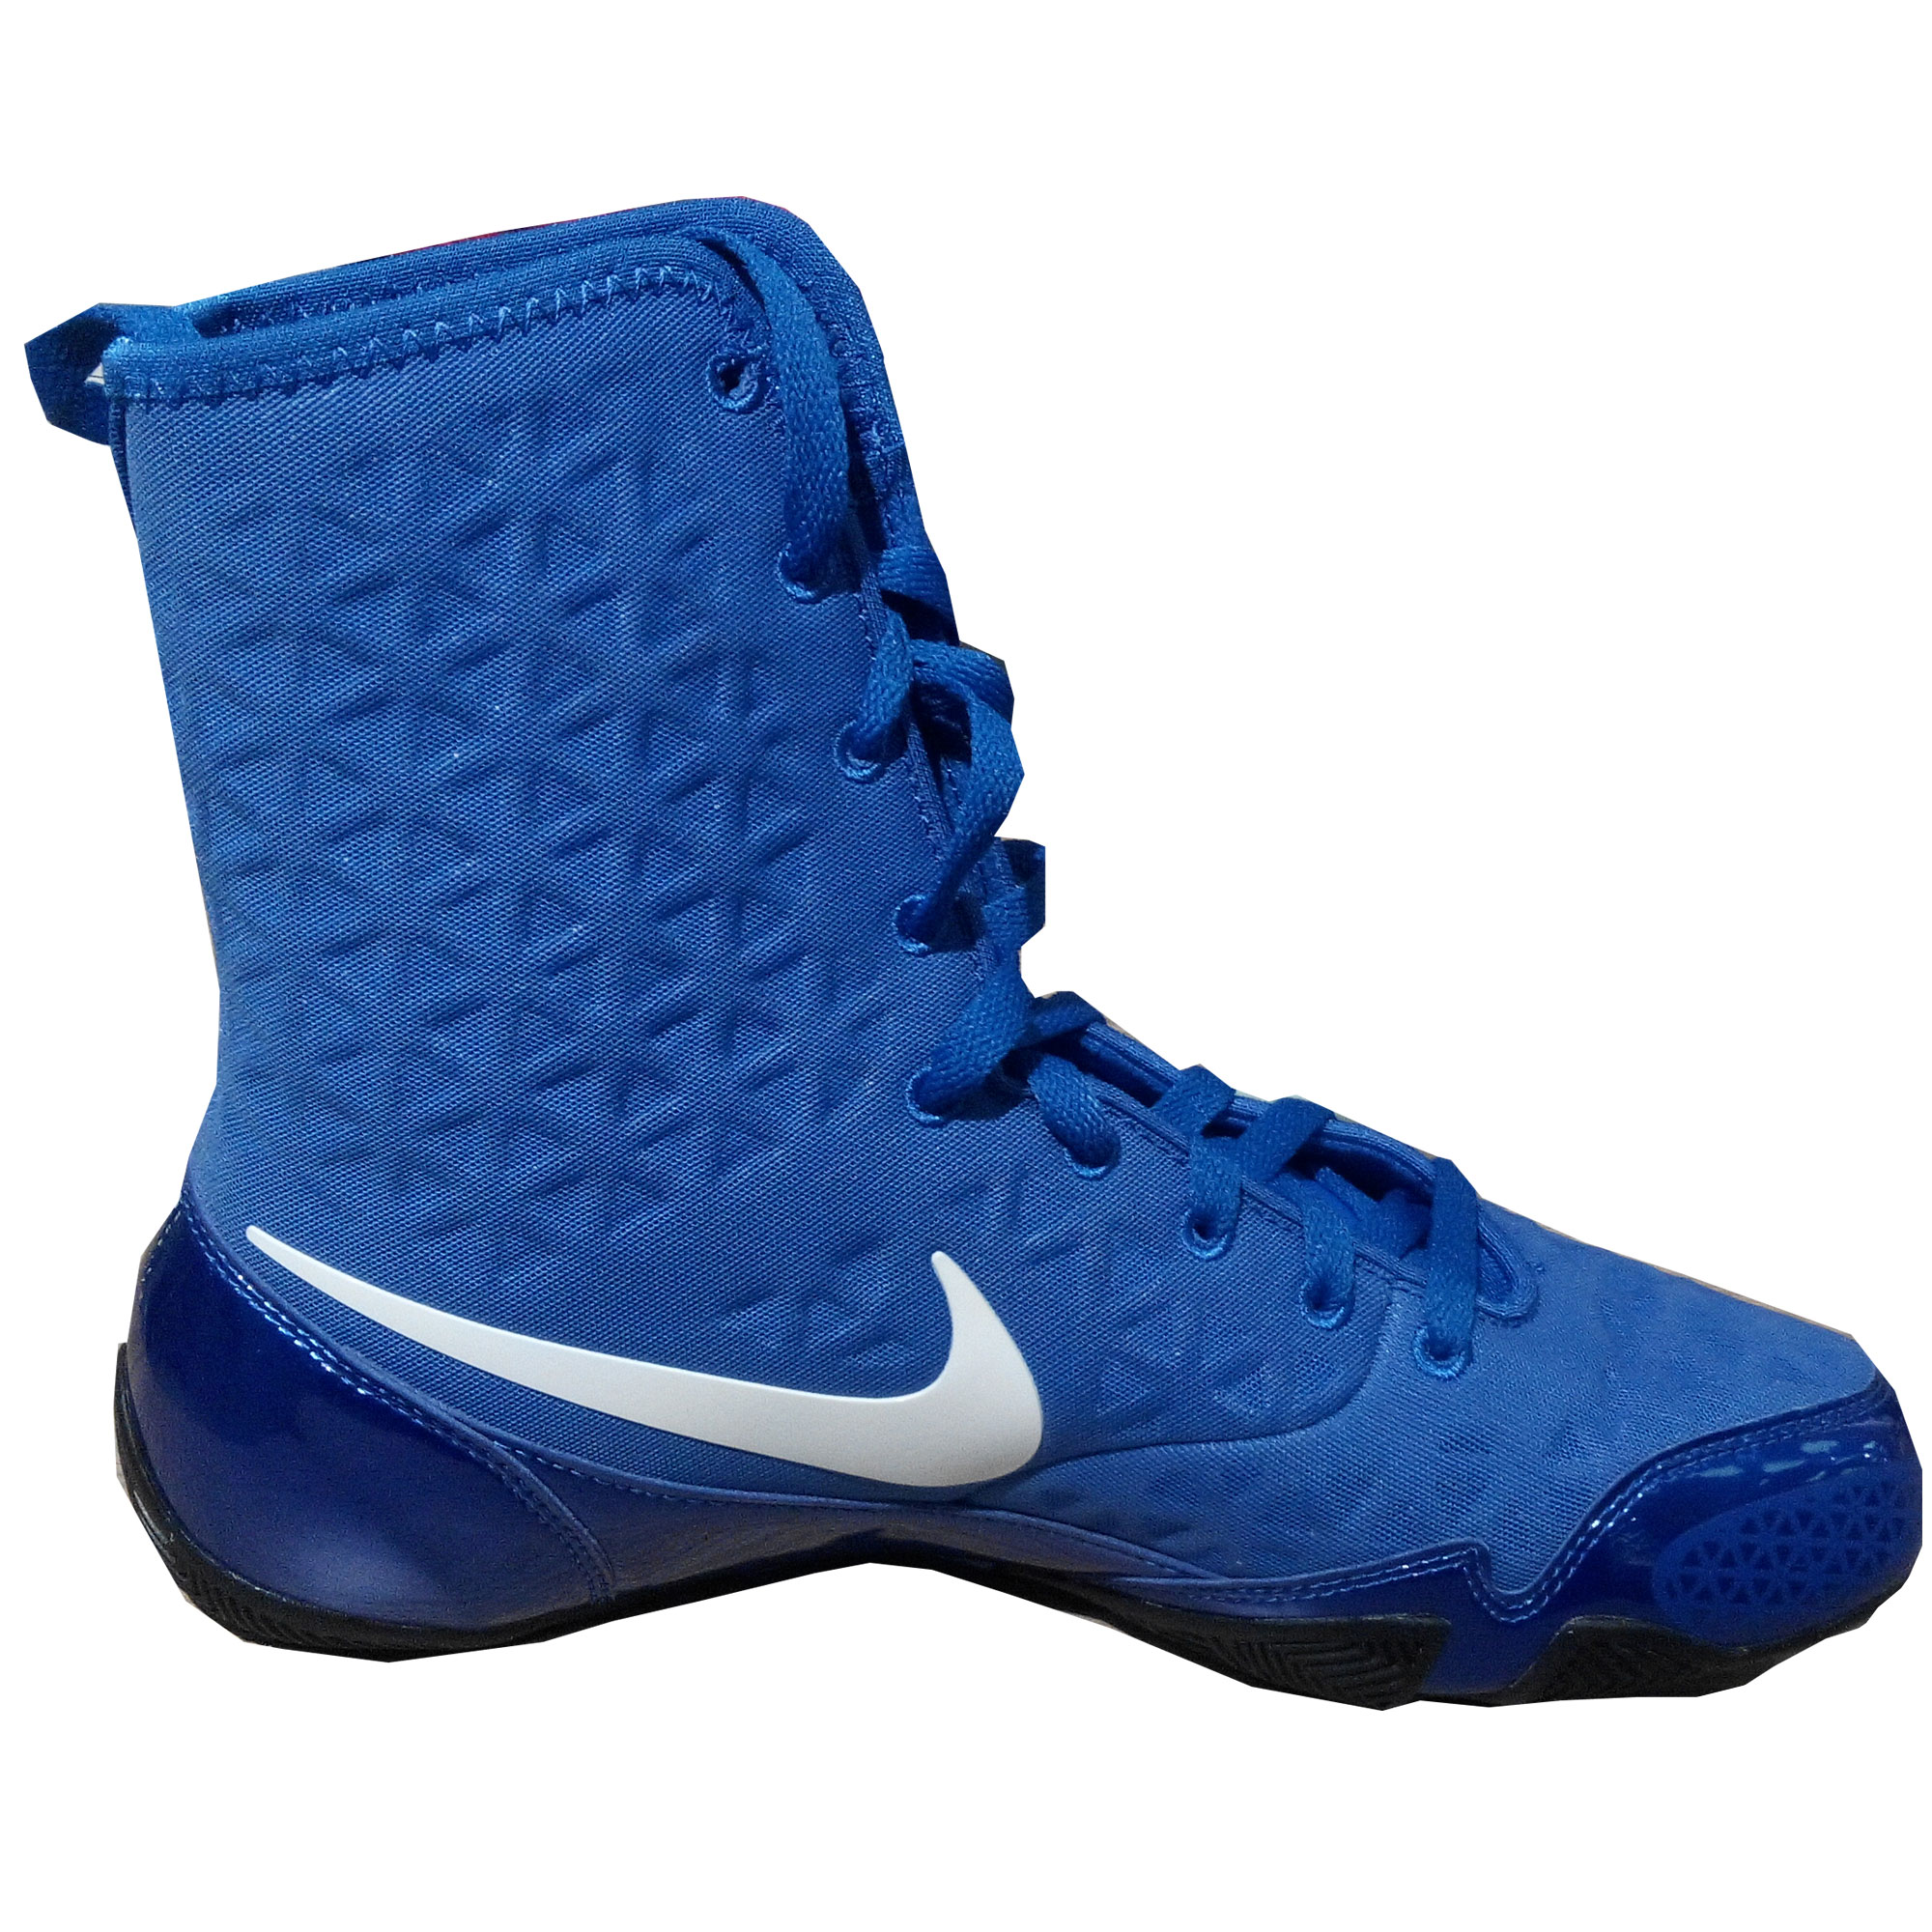 Боксерски найк. Боксерки Nike ko 839421-001. Боксерки Nike ko Boxing. Боксерки найк синие. Боксерки Nike синие.